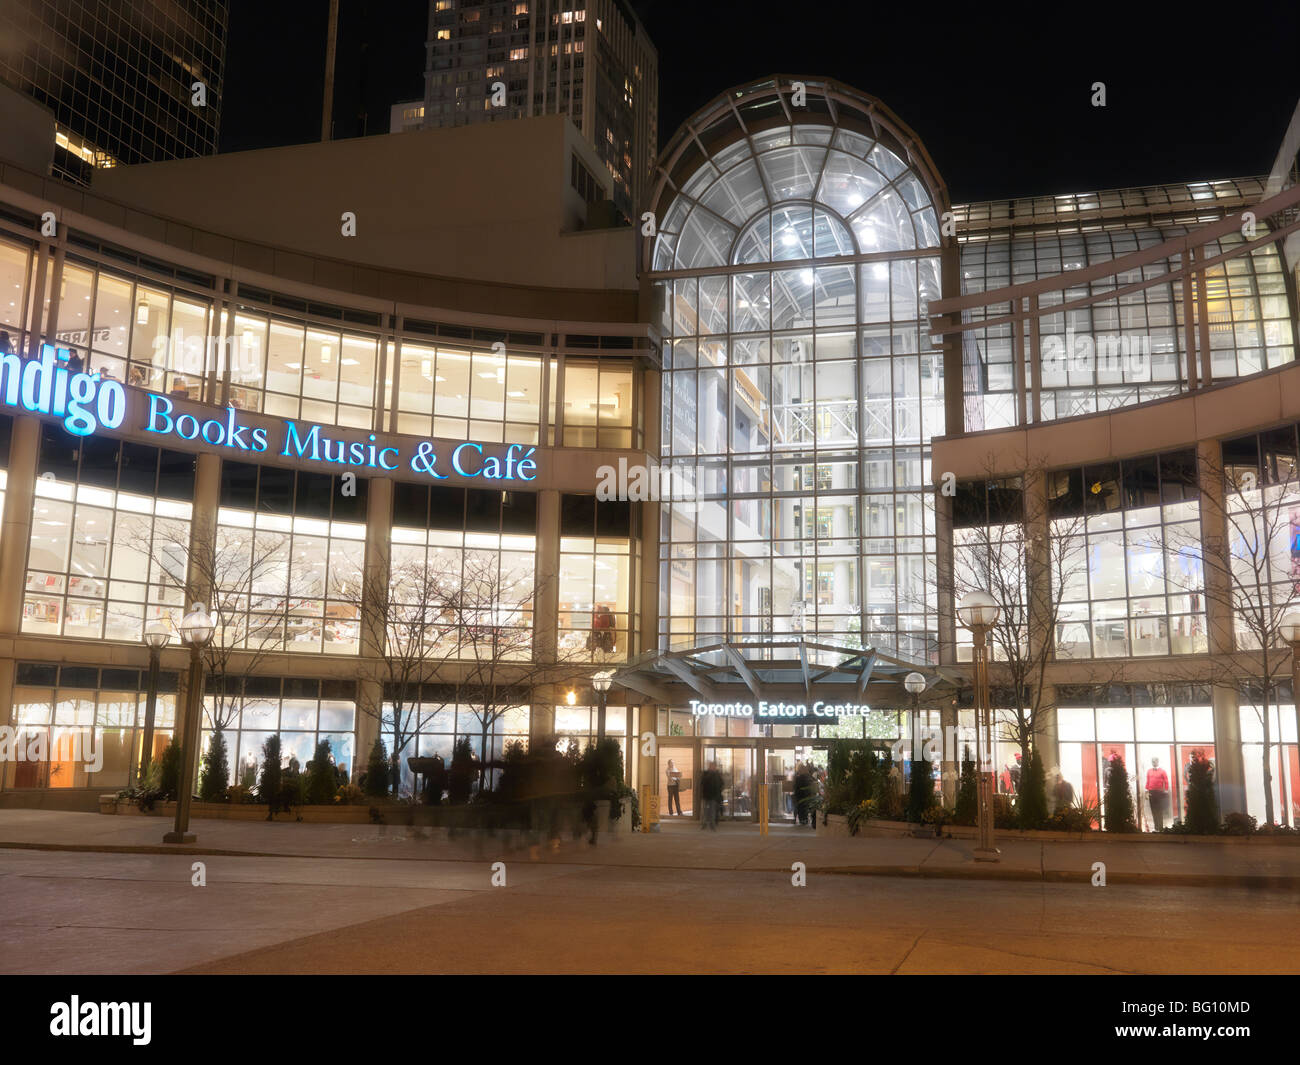 Toronto Eaton Centre at night during Christmas holidays season. Toronto, Ontario, Canada. Stock Photo